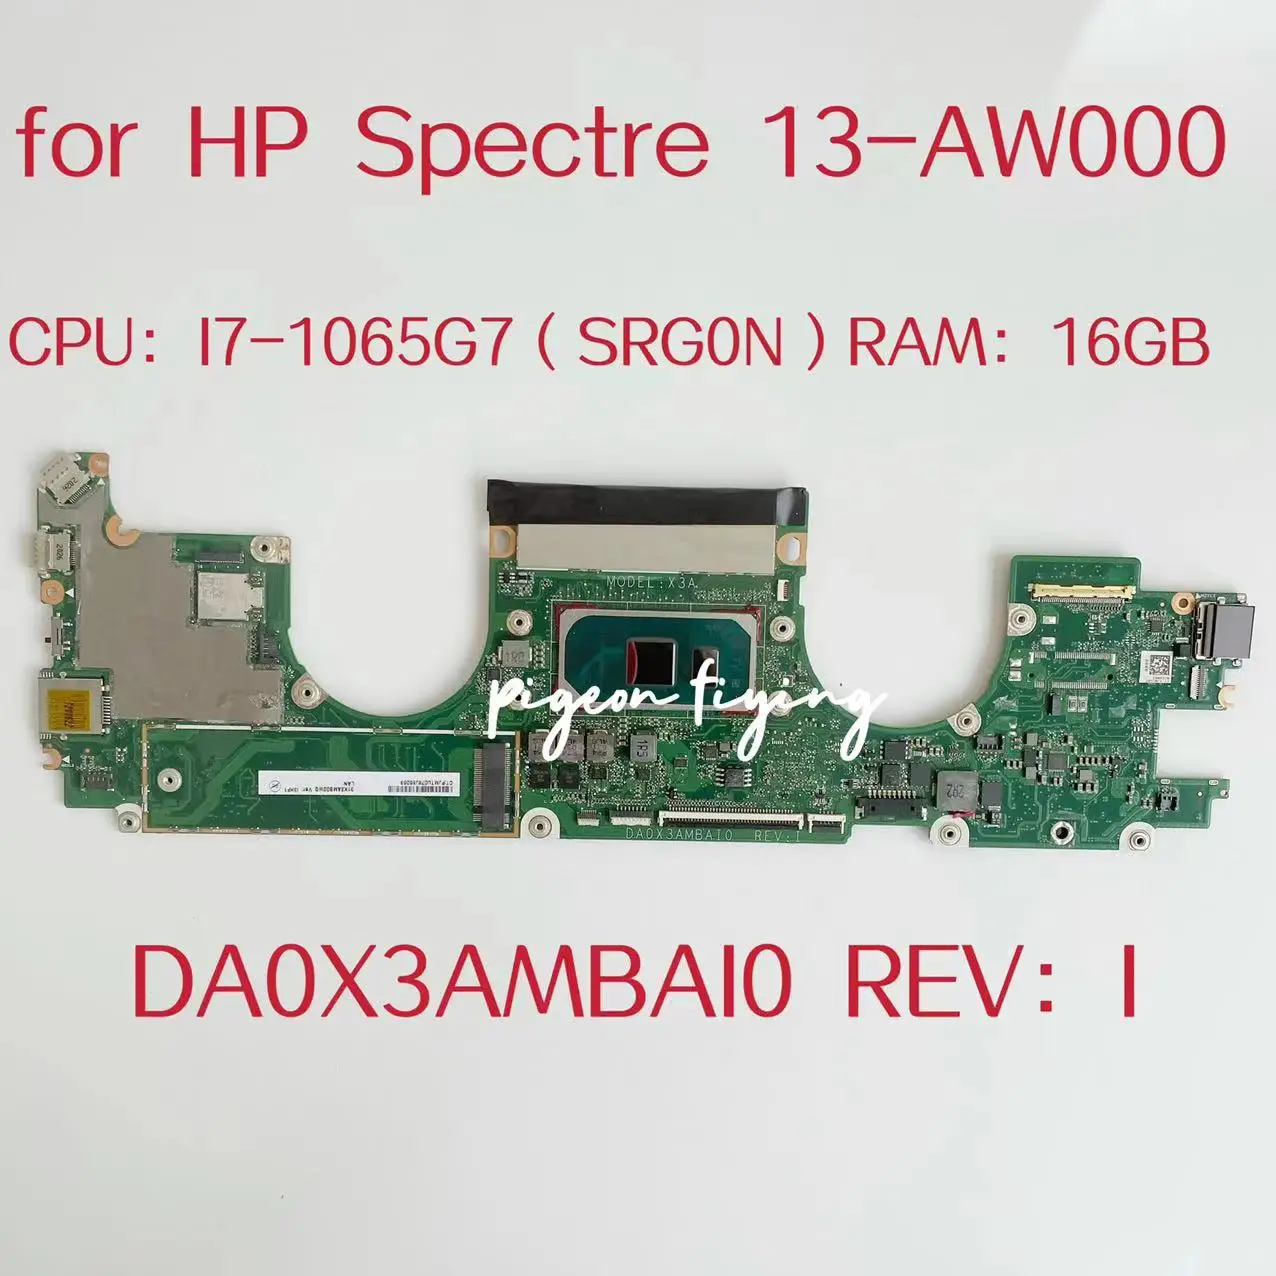 

DA0X3AMBAI0 For HP Spectre X360 13-AW000 Laptop Motherboard CPU:I7-1065G7 SRG0N RAM:16GB L77411-601 L77411-001 Mainboard Test OK